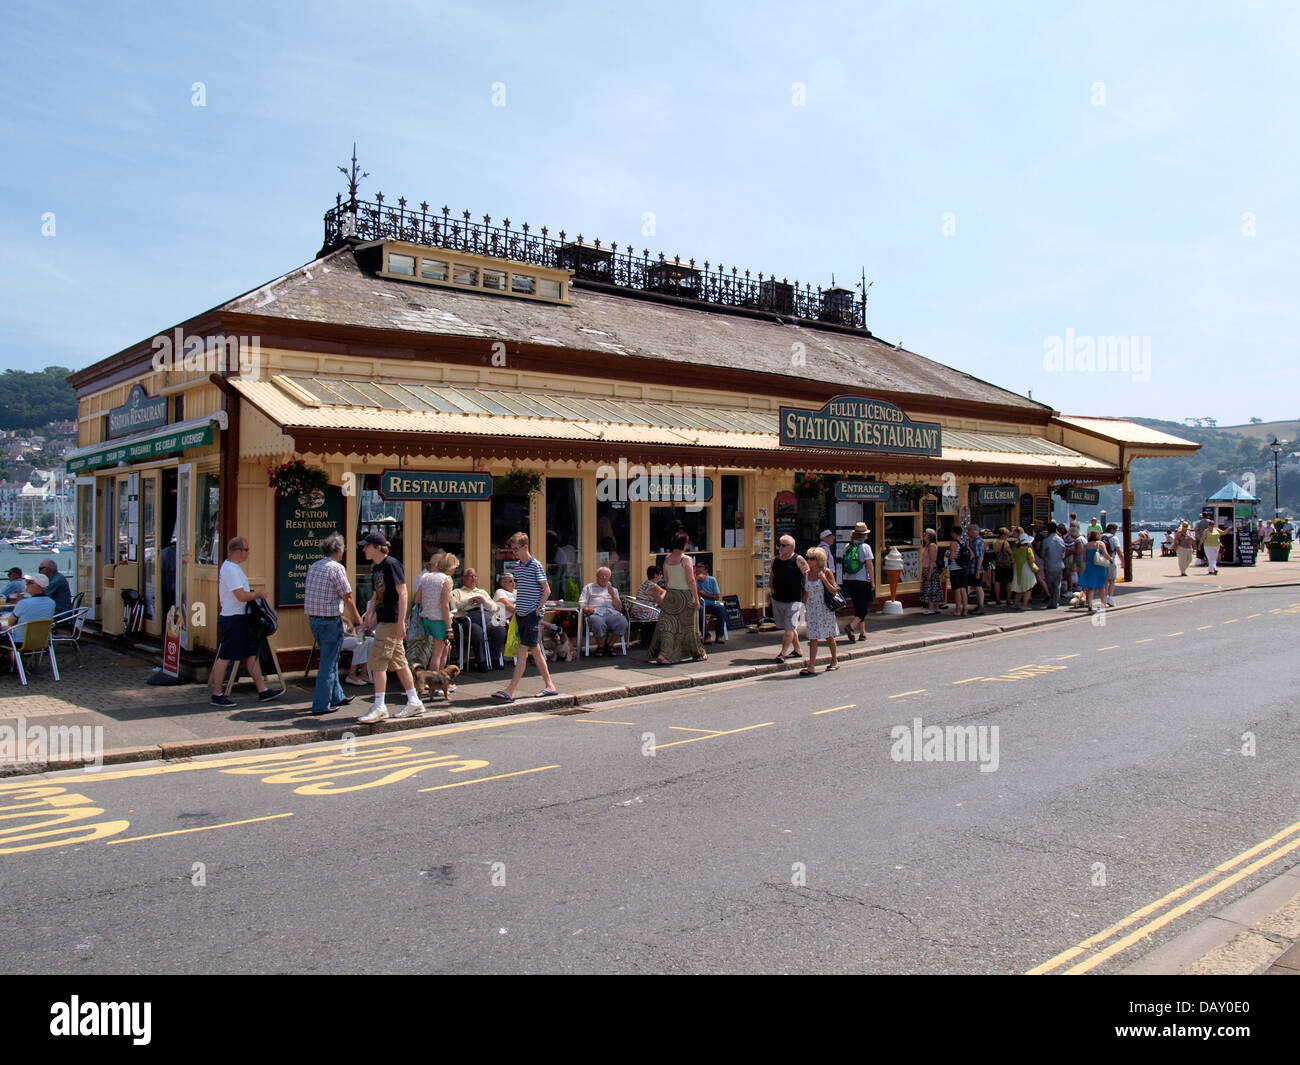 Station Restaurant, Dartmouth, Devon, UK 2013 Stock Photo